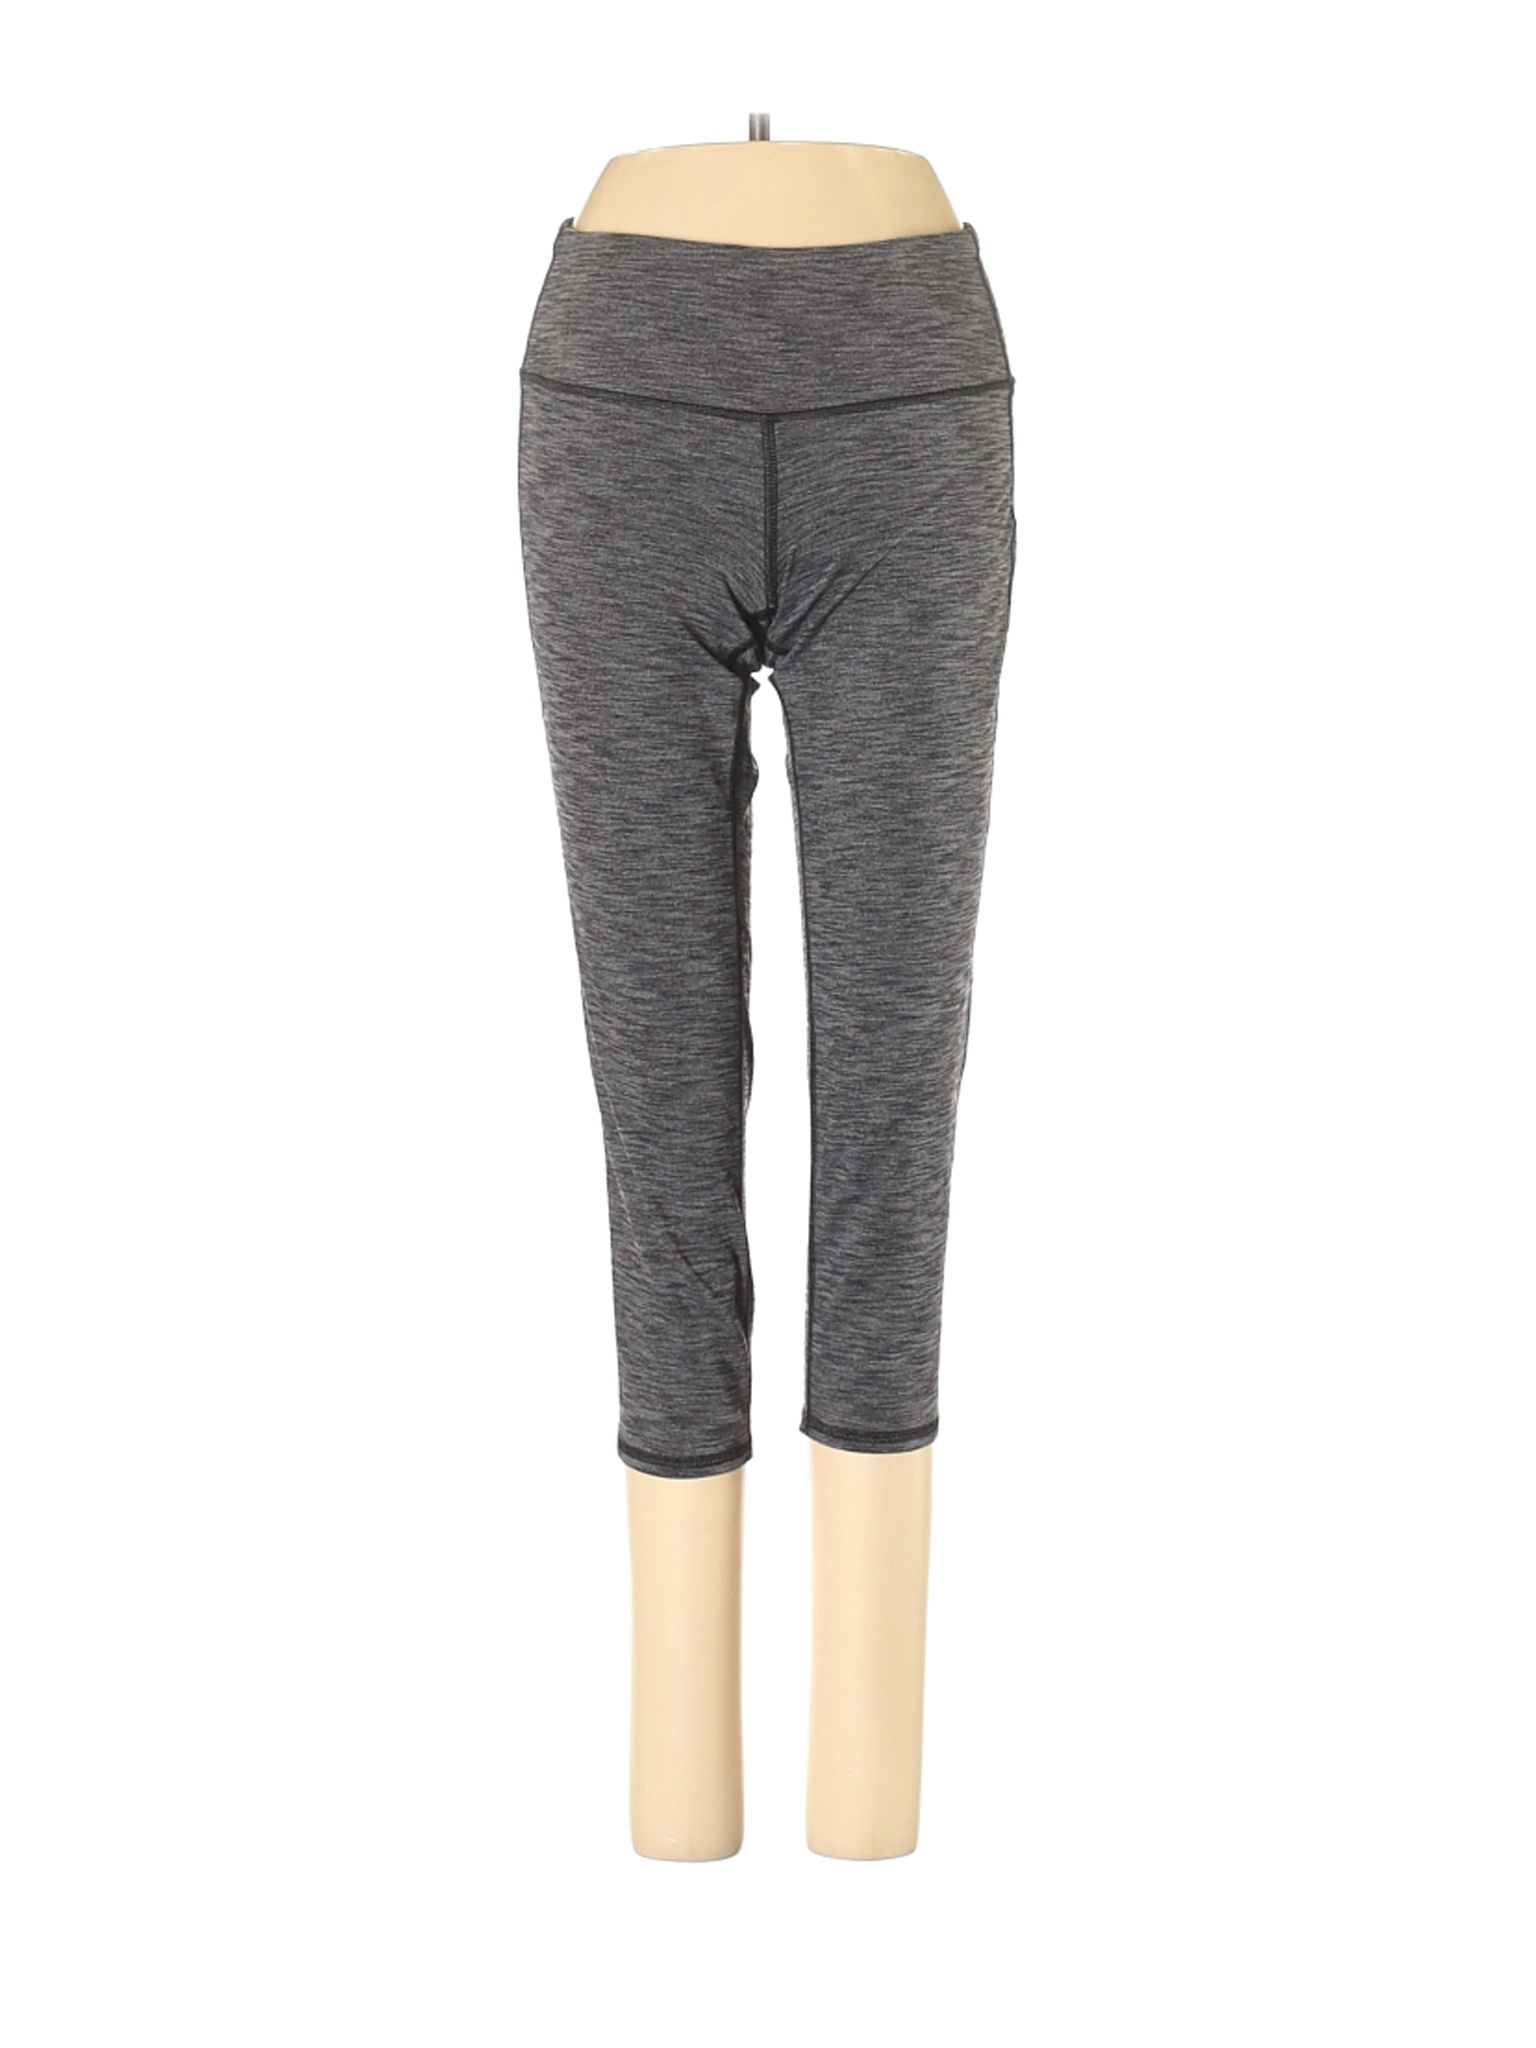 Athleta Women Gray Active Pants XS | eBay